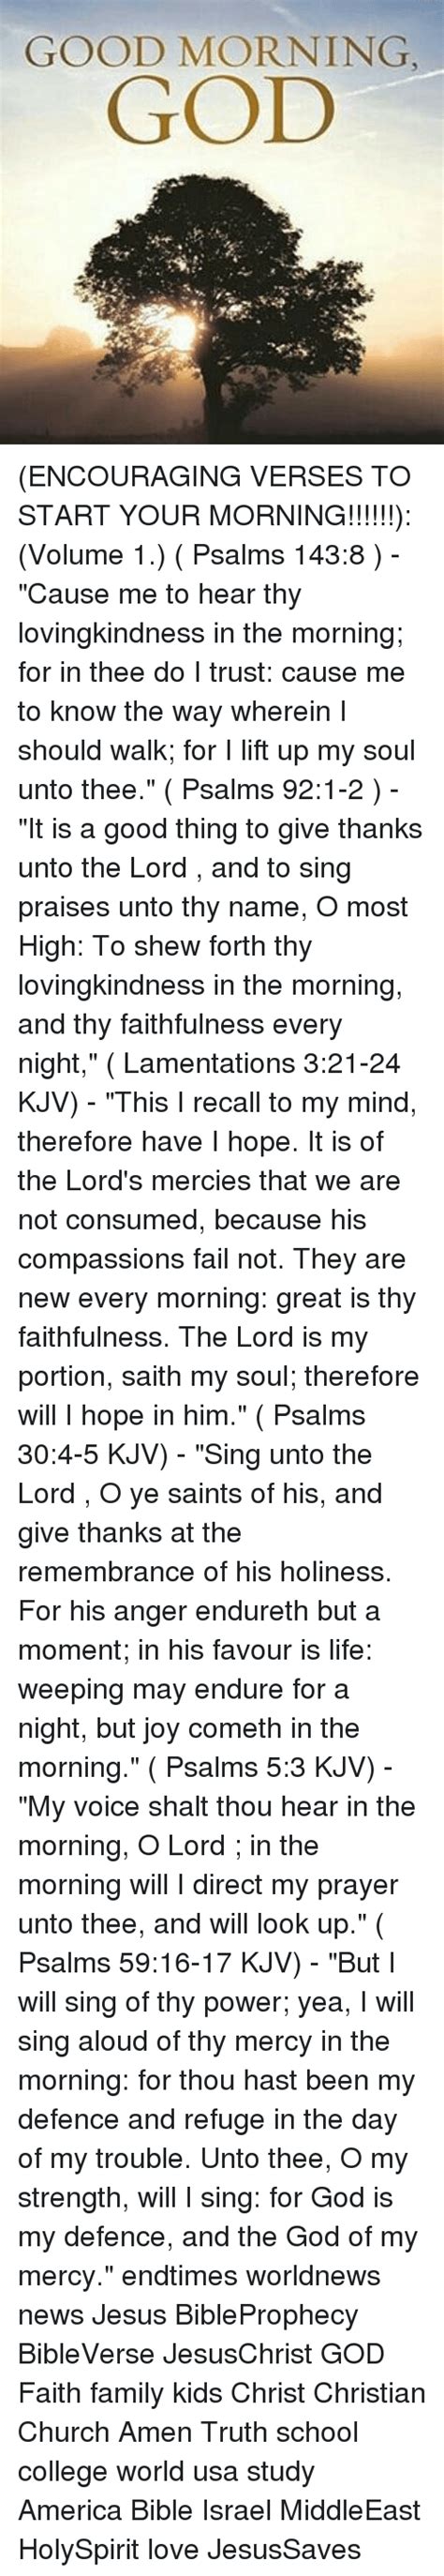 Good Morning God Encouraging Verses To Start Your Morning Volume